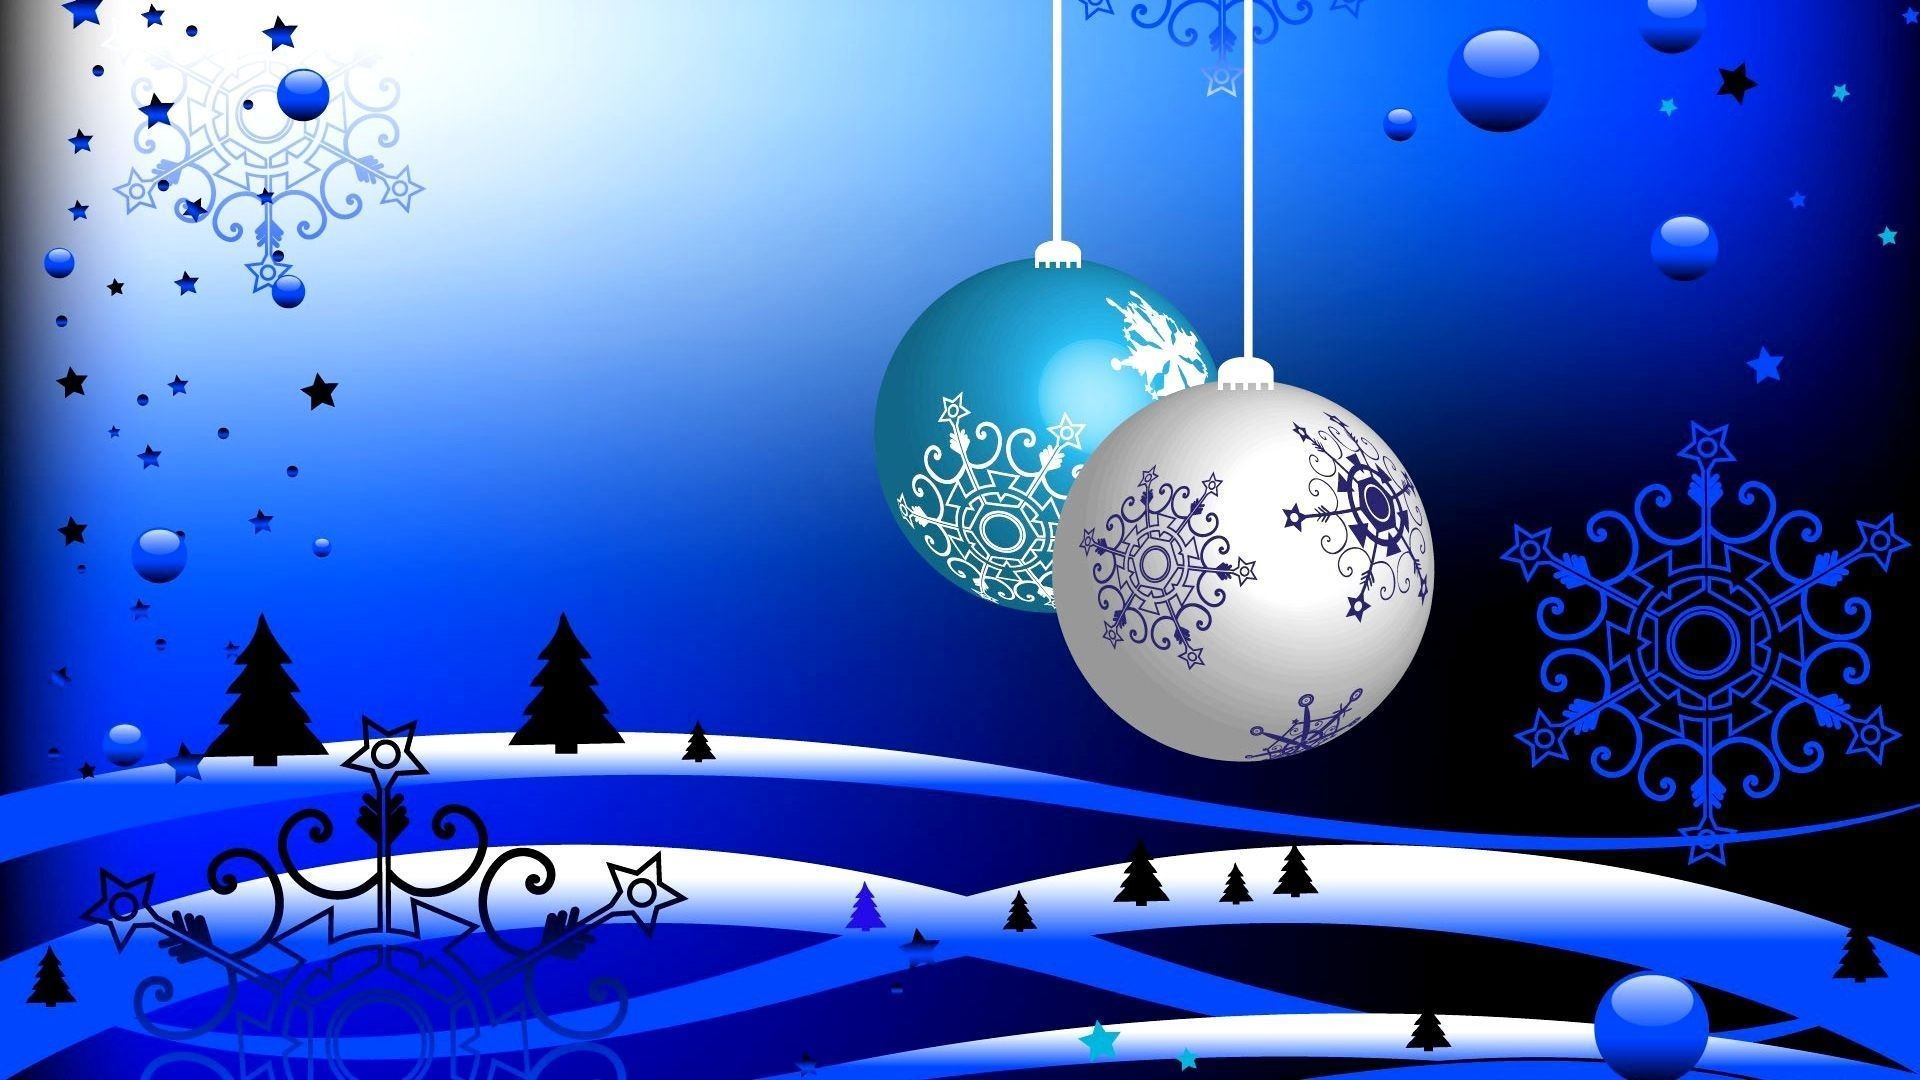 1920x1080 Animated Desktop Backgrounds Blue Christmas Wallpaper photos of .